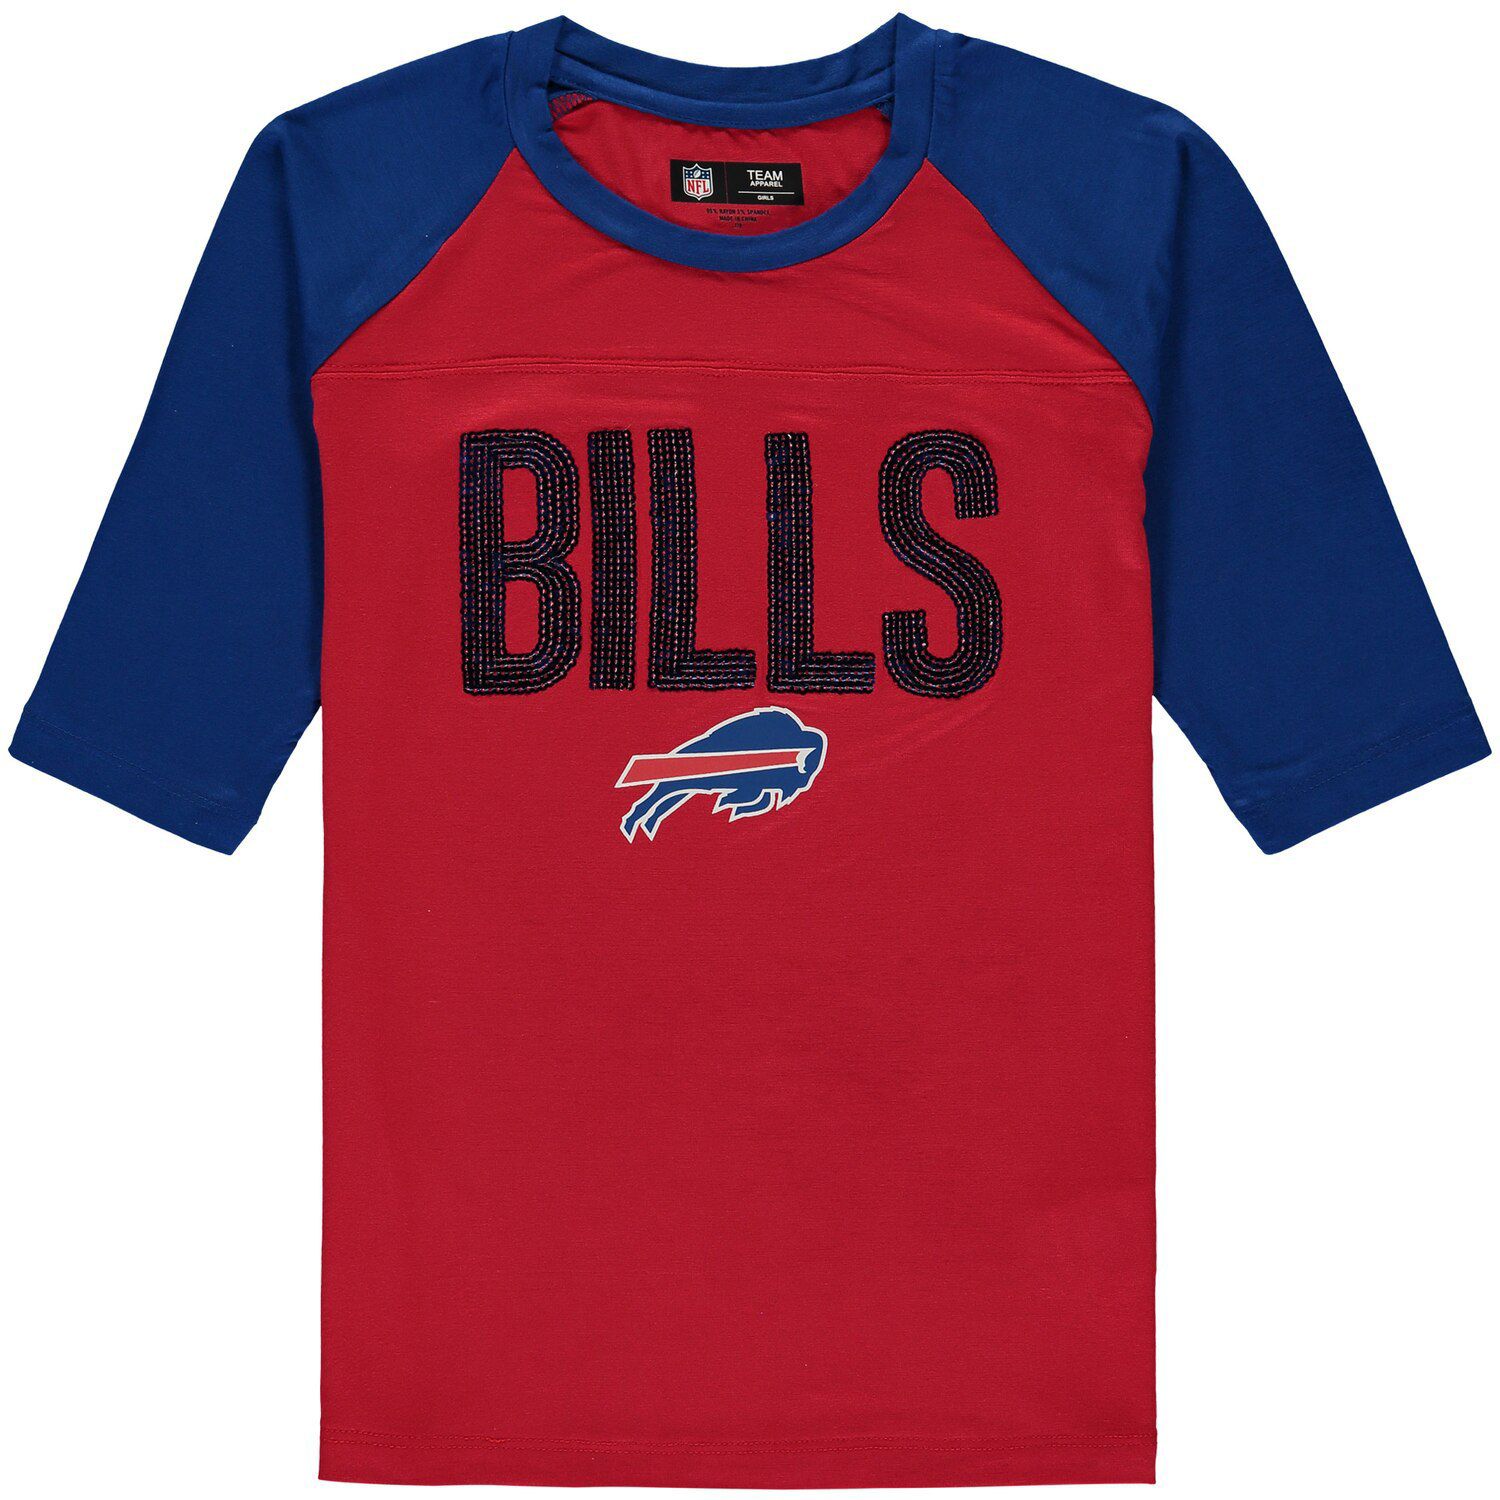 girls buffalo bills jersey